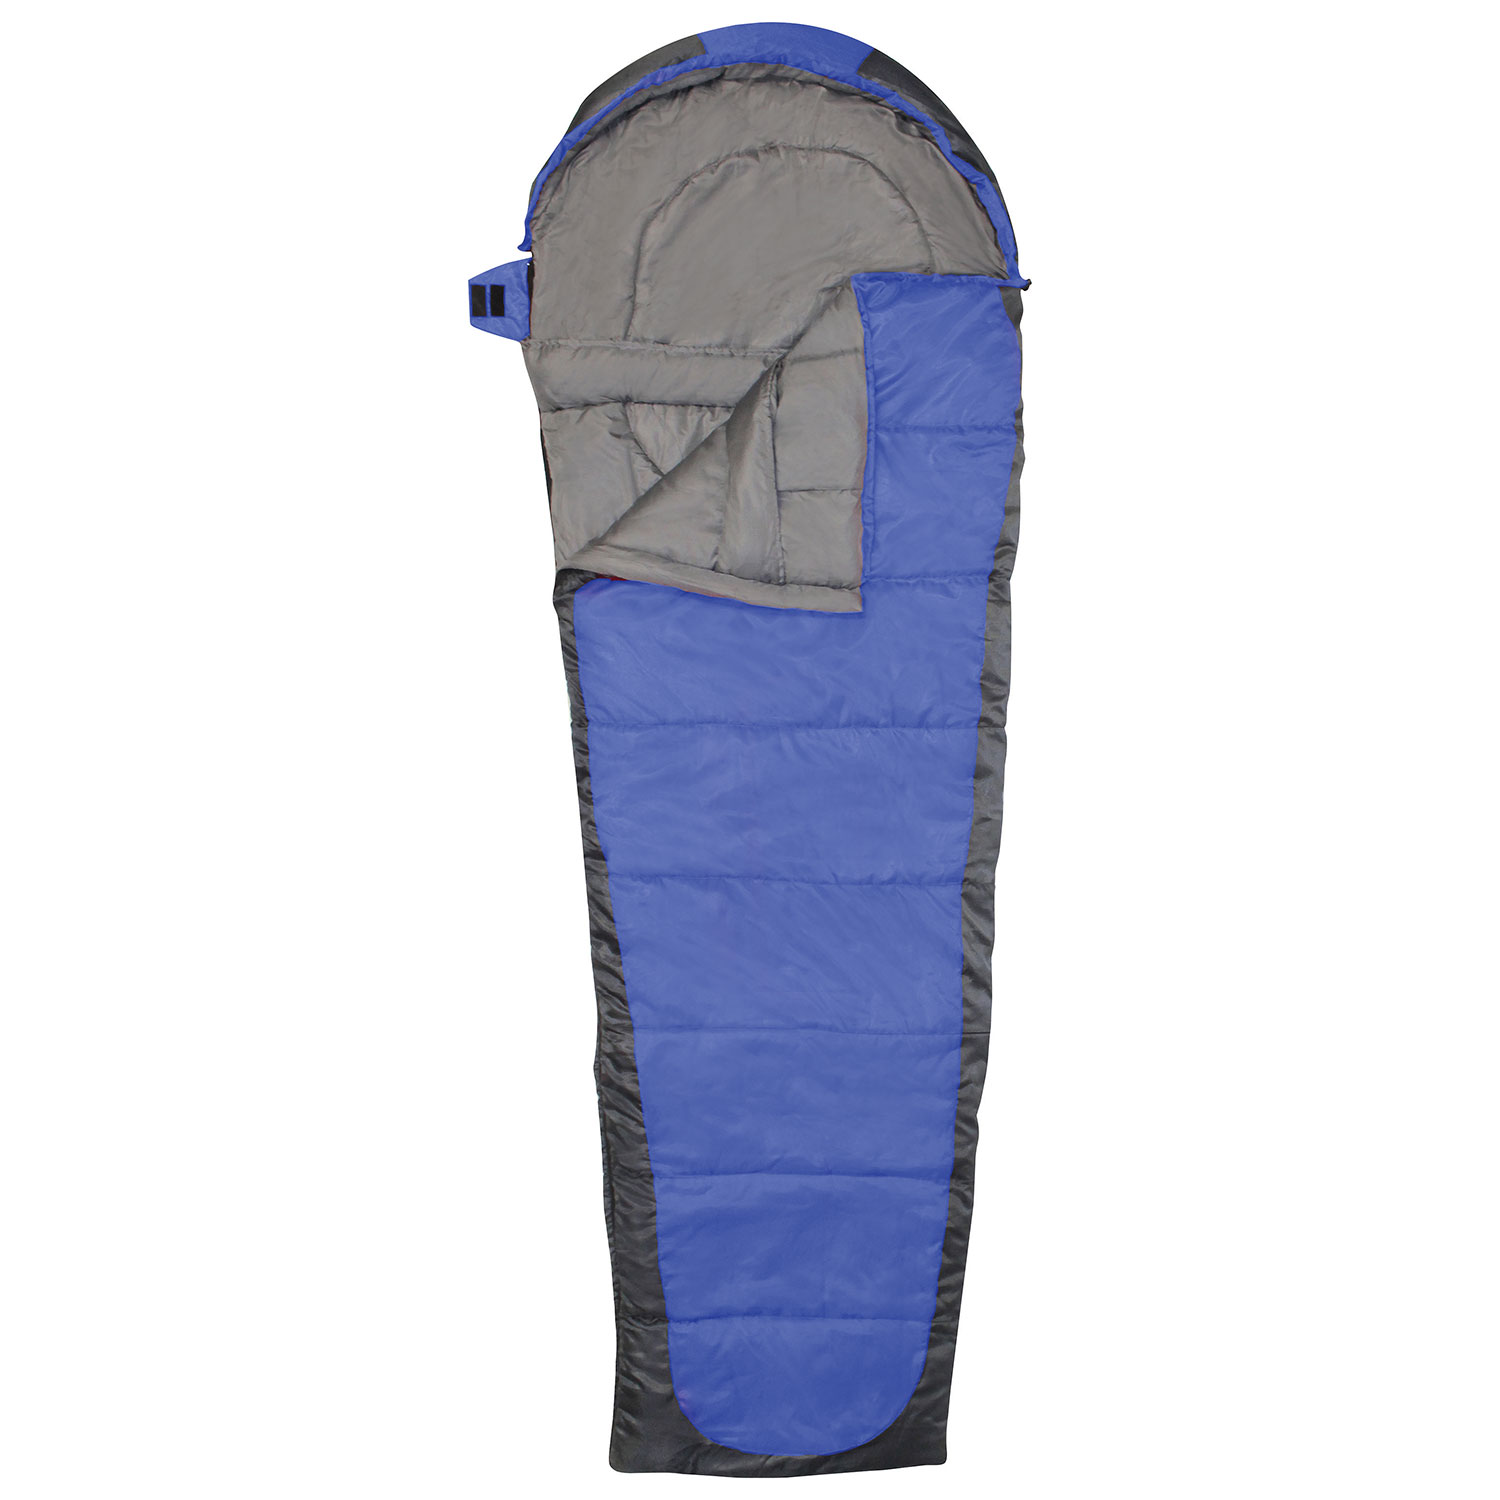 Rockwater Designs Semi-Rectangular Heat Zone Sleeping Bag (0-Degrees Celcius) - Royal/Dark Grey